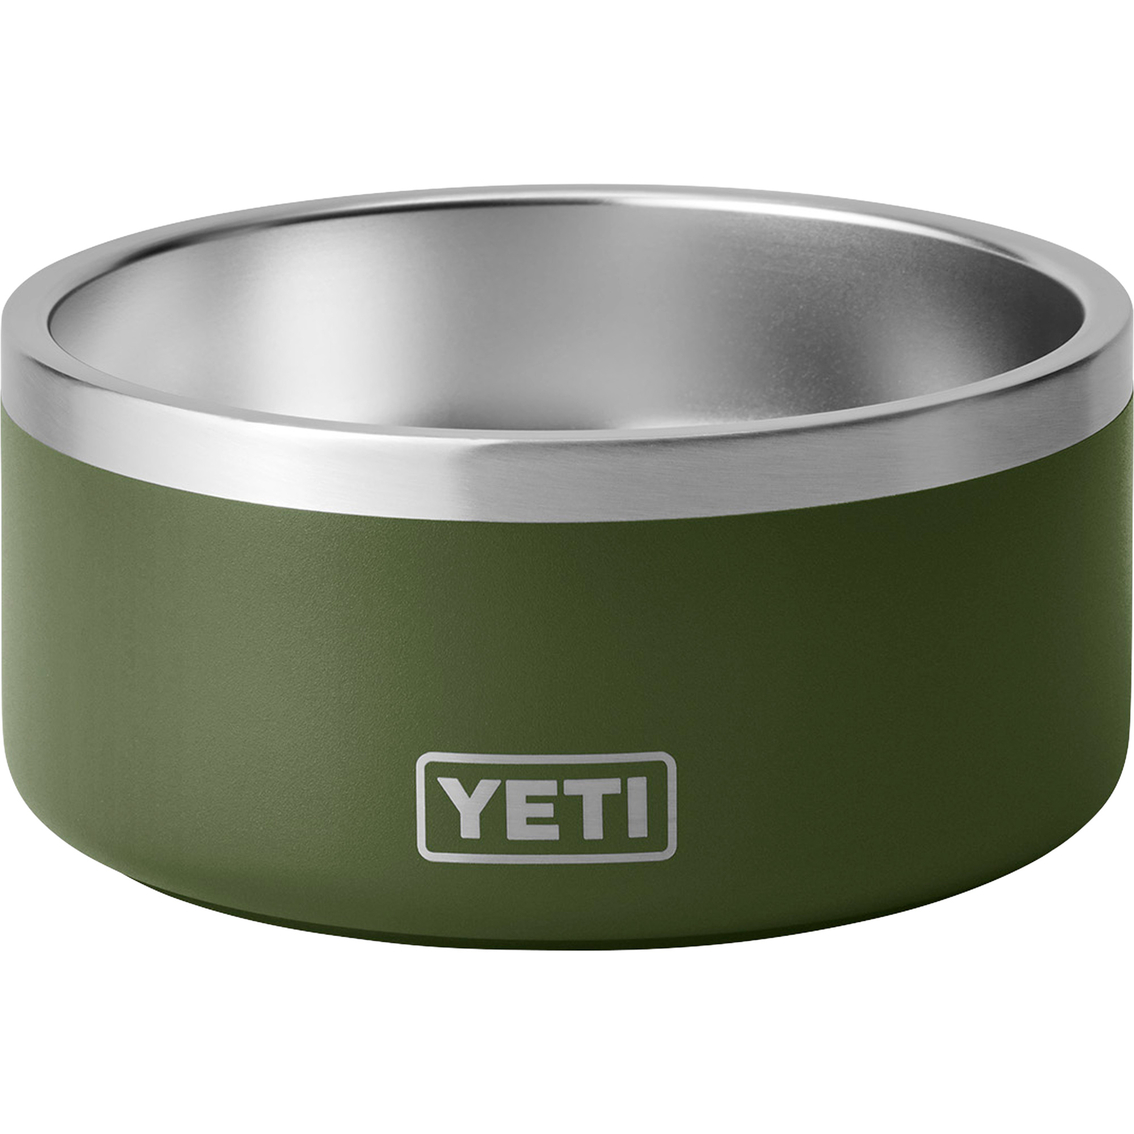 Yeti Boomer 4 Dog Bowl, Bowls & Feeders, Household